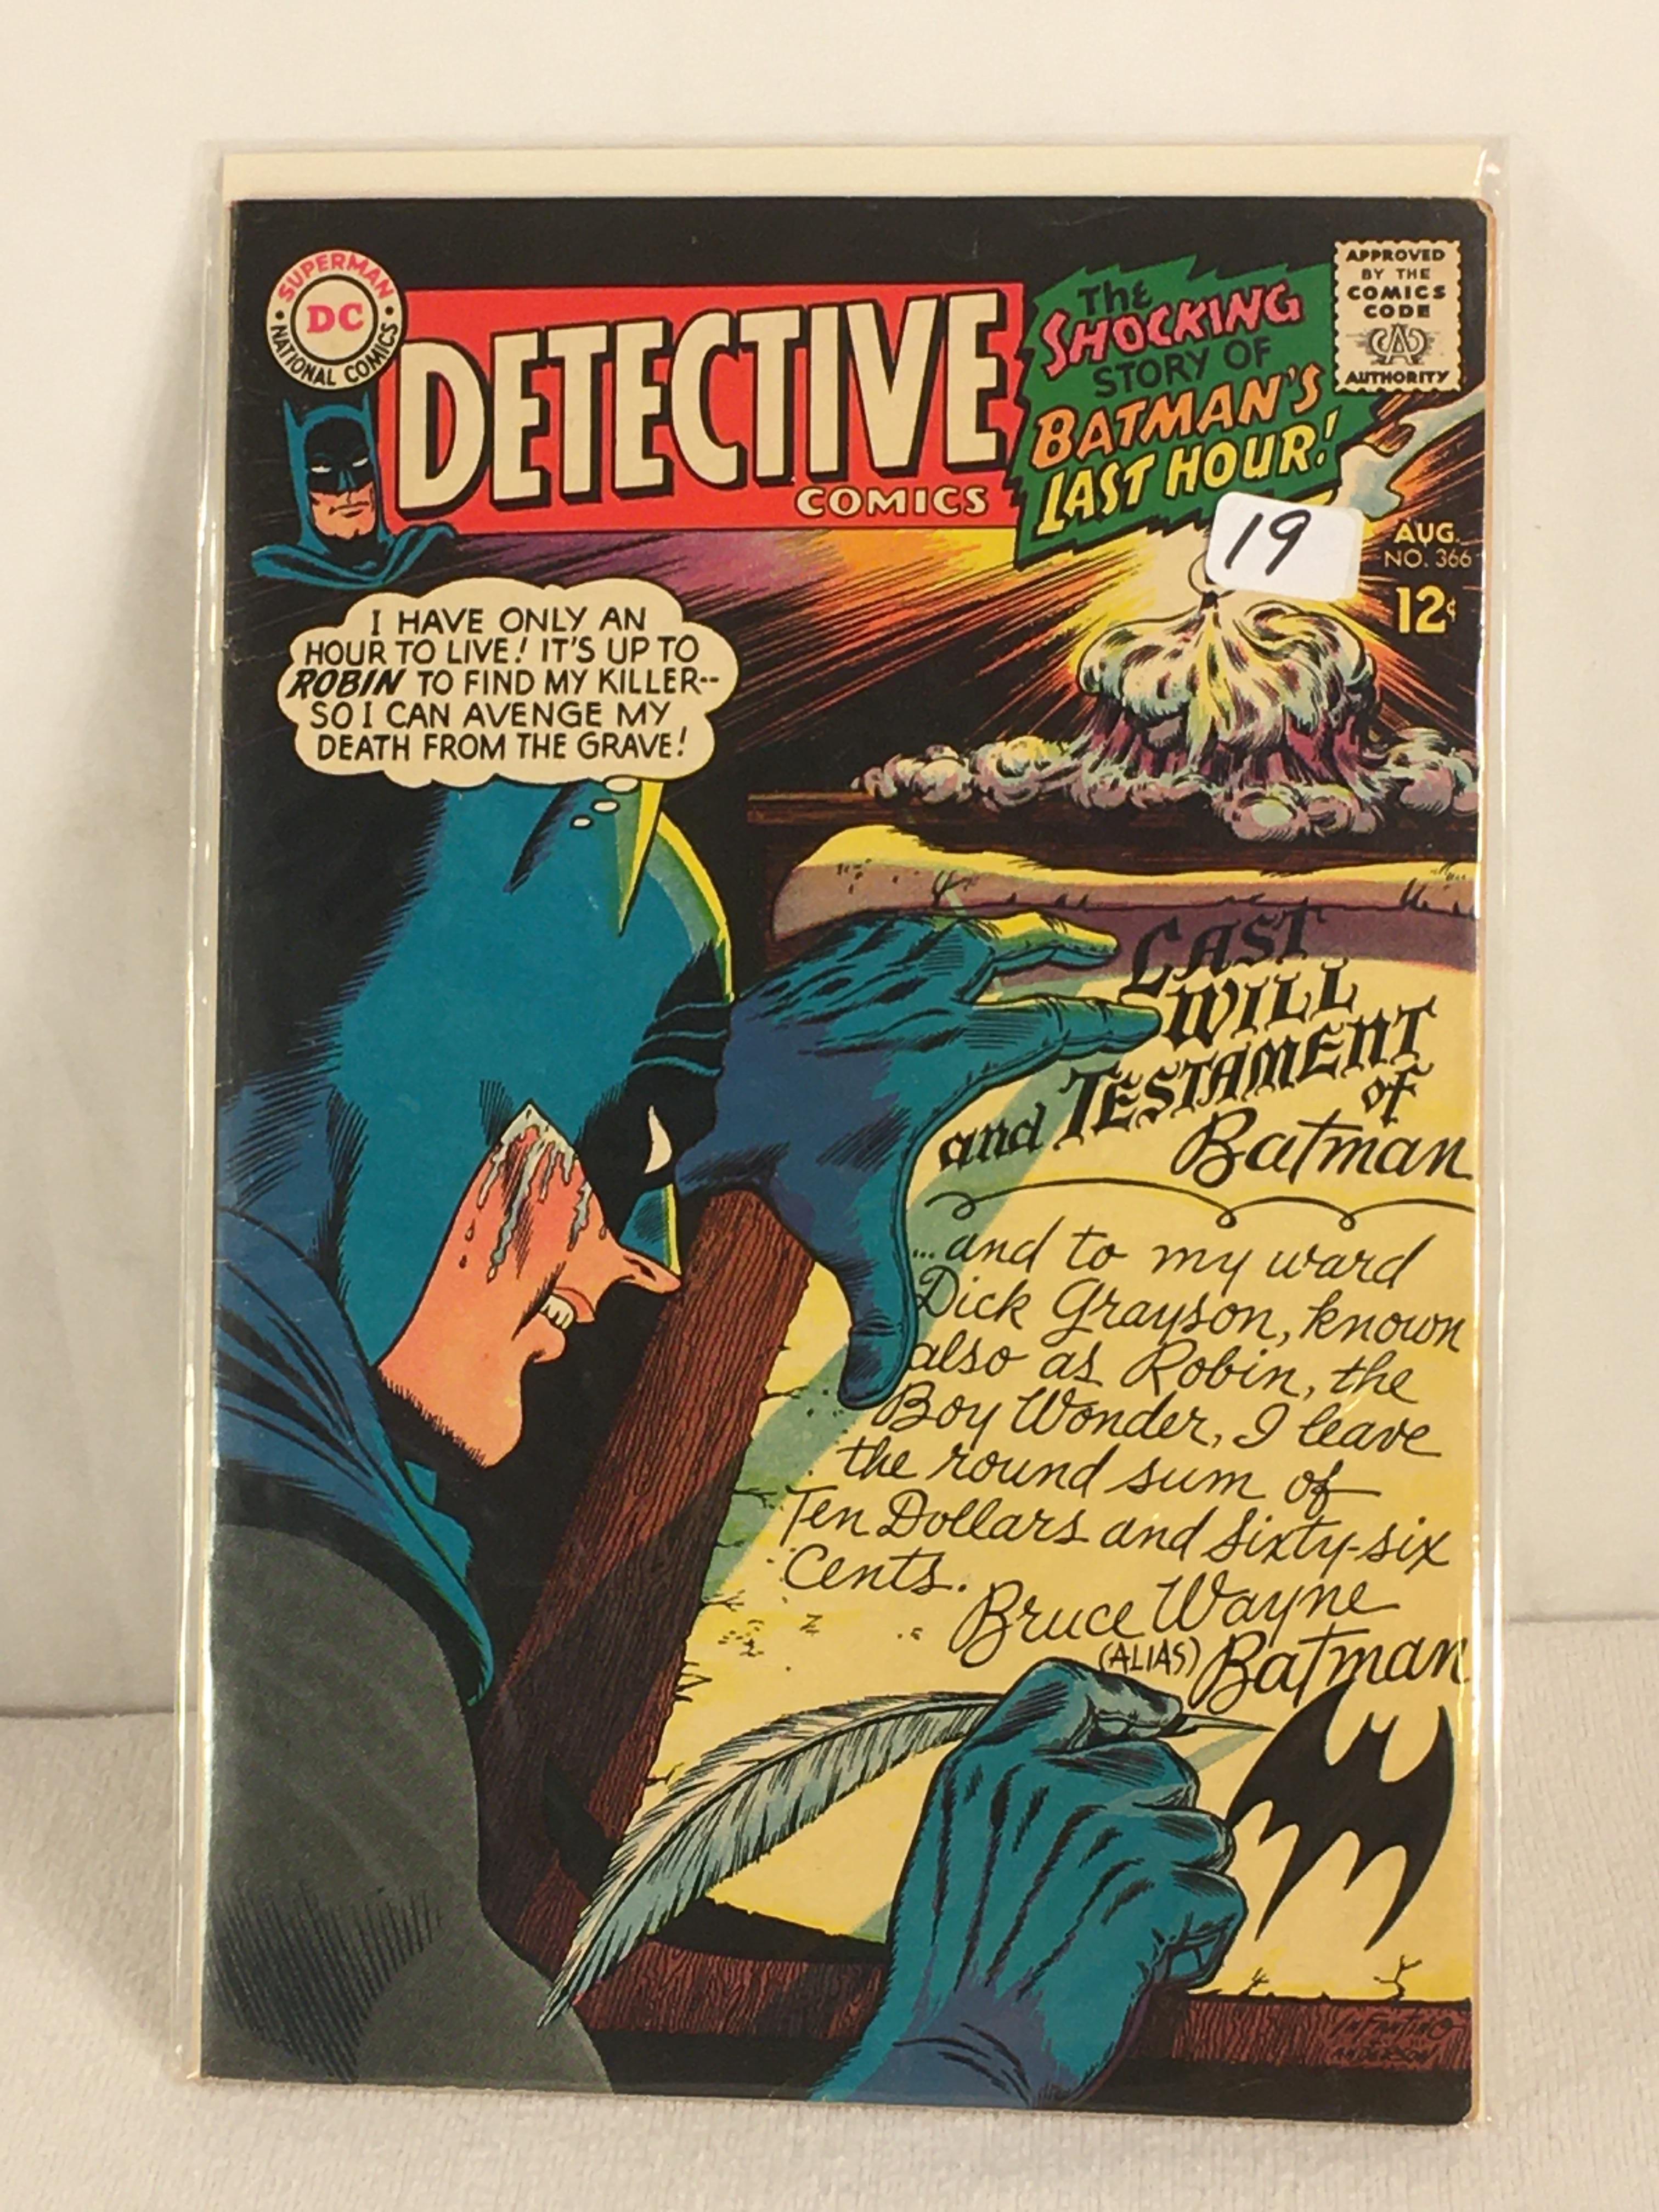 Collector Vintage DC, Comics Detective Comics The Shocking Story Of Batman's Last Hour #366